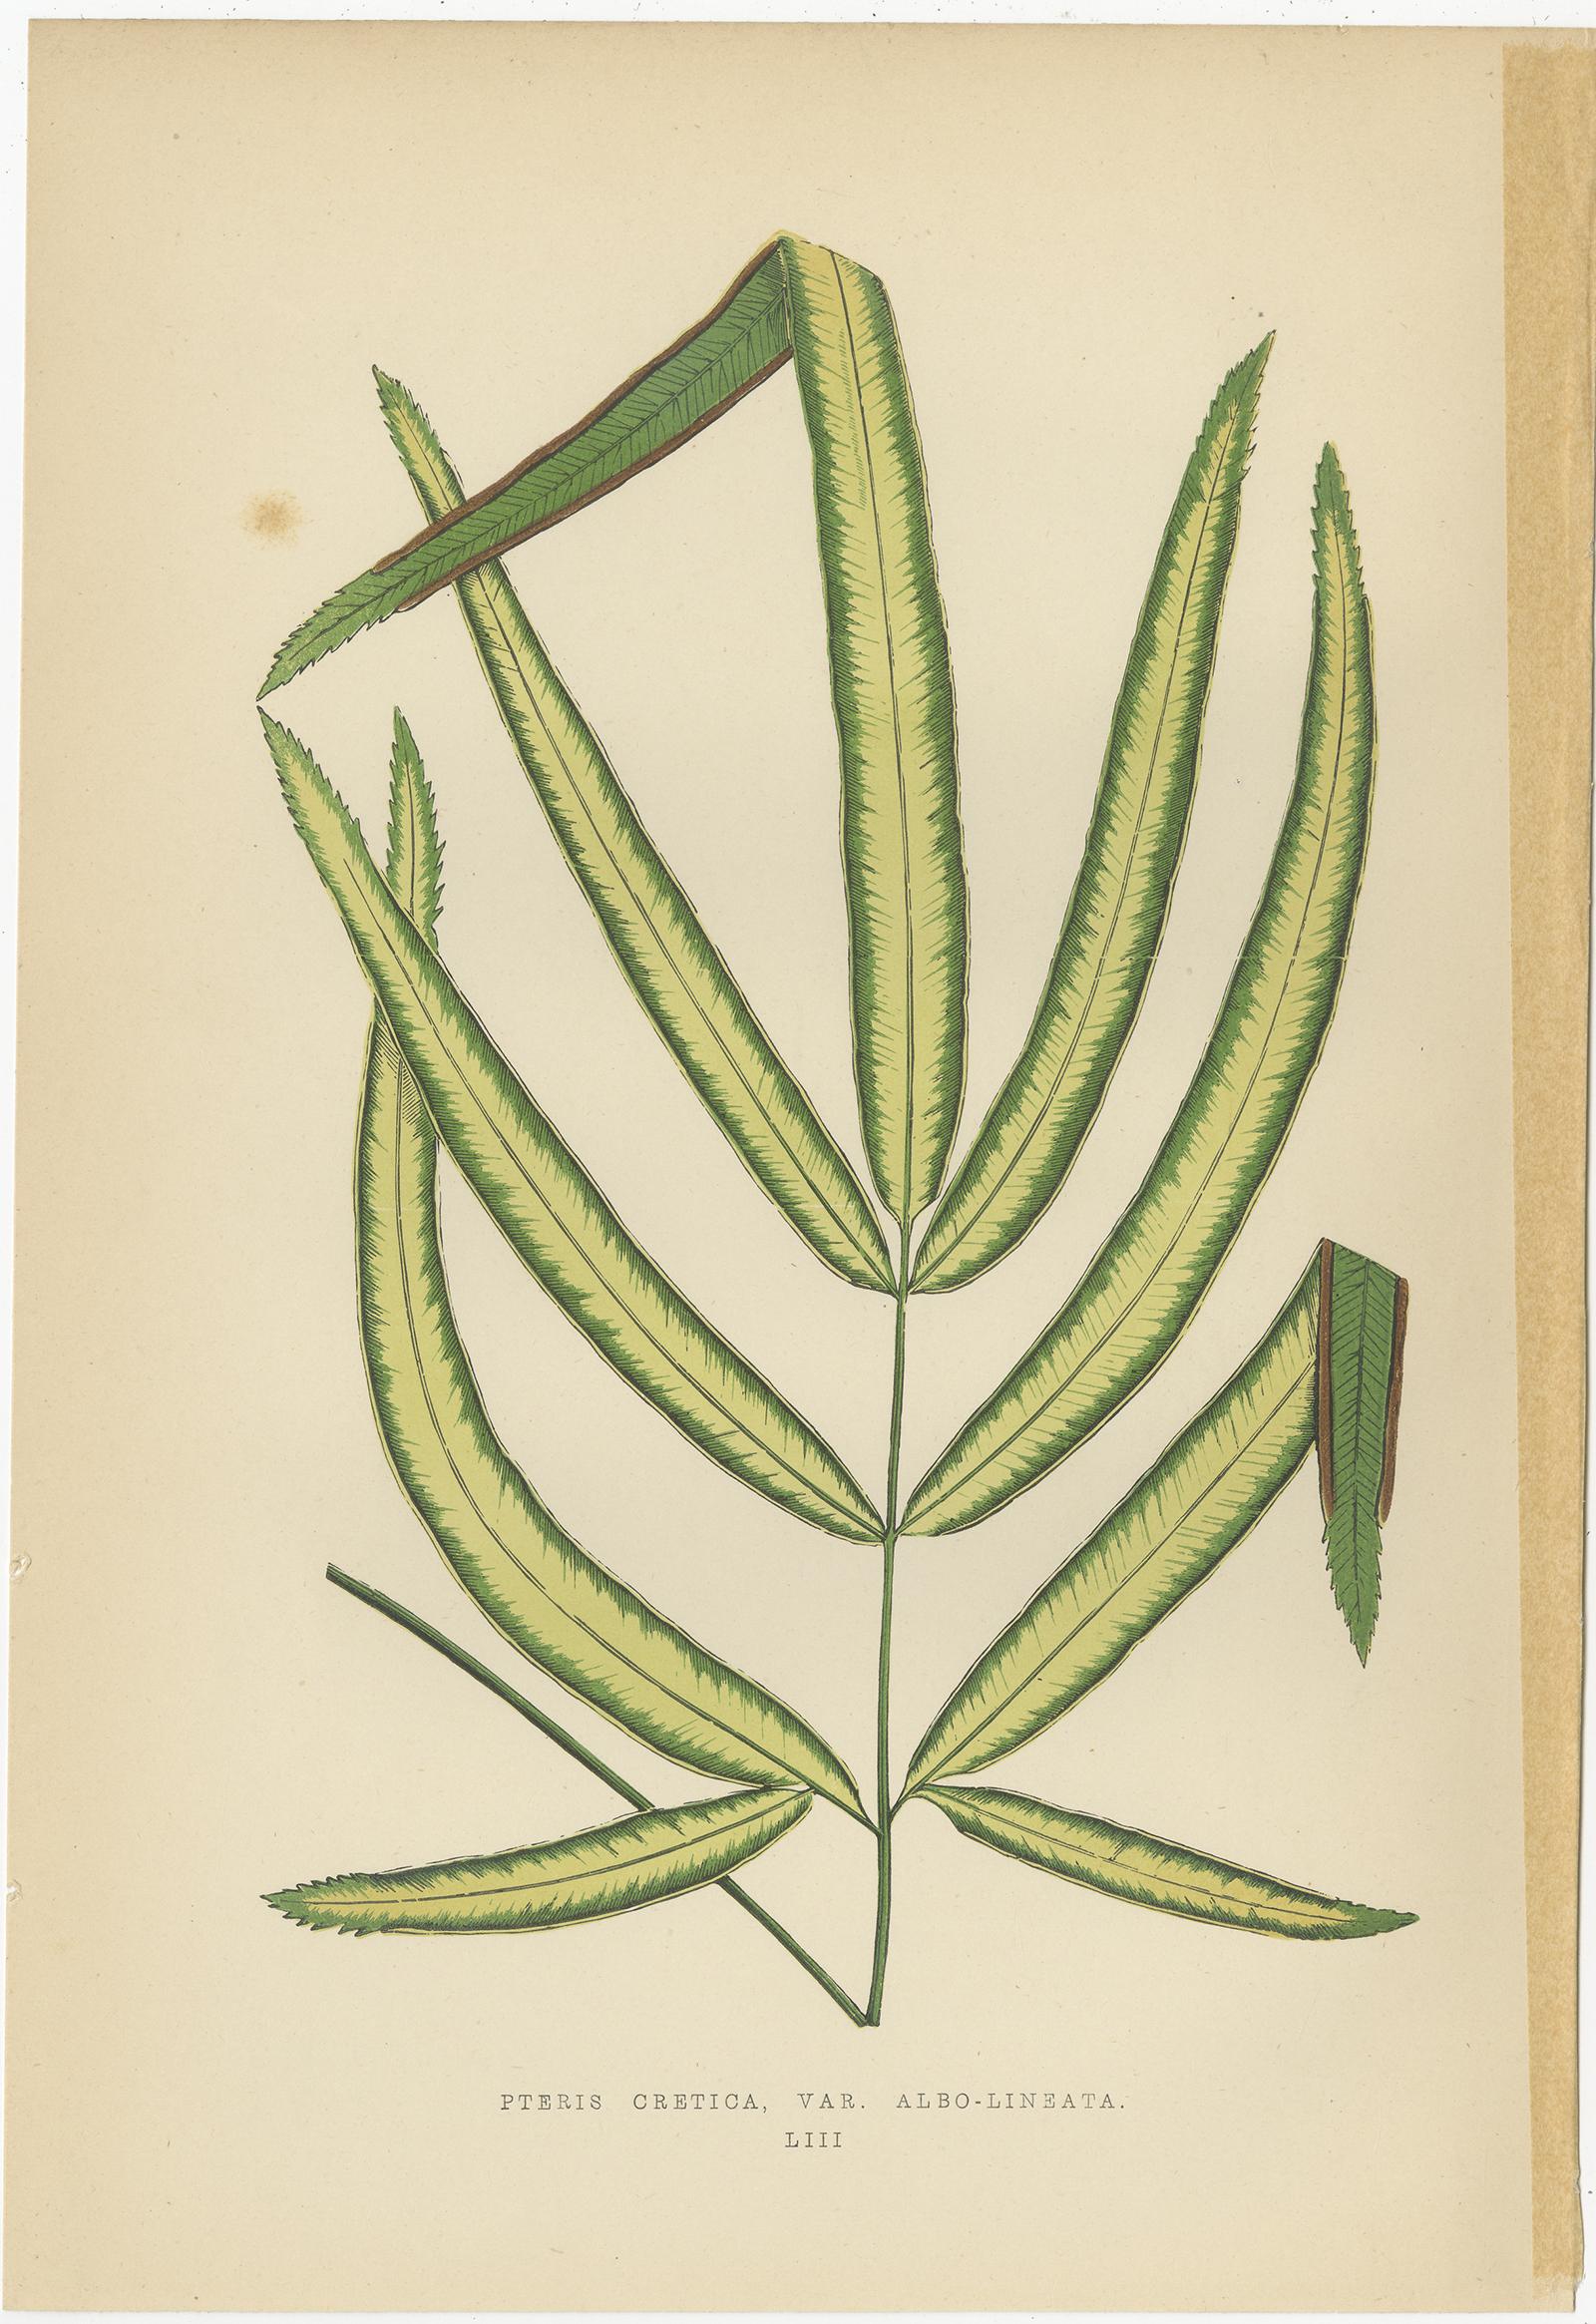 Set of 6 Botany Prints, Caladium Verschaffelt, Cordyline Indivisa, 1891 For Sale 1